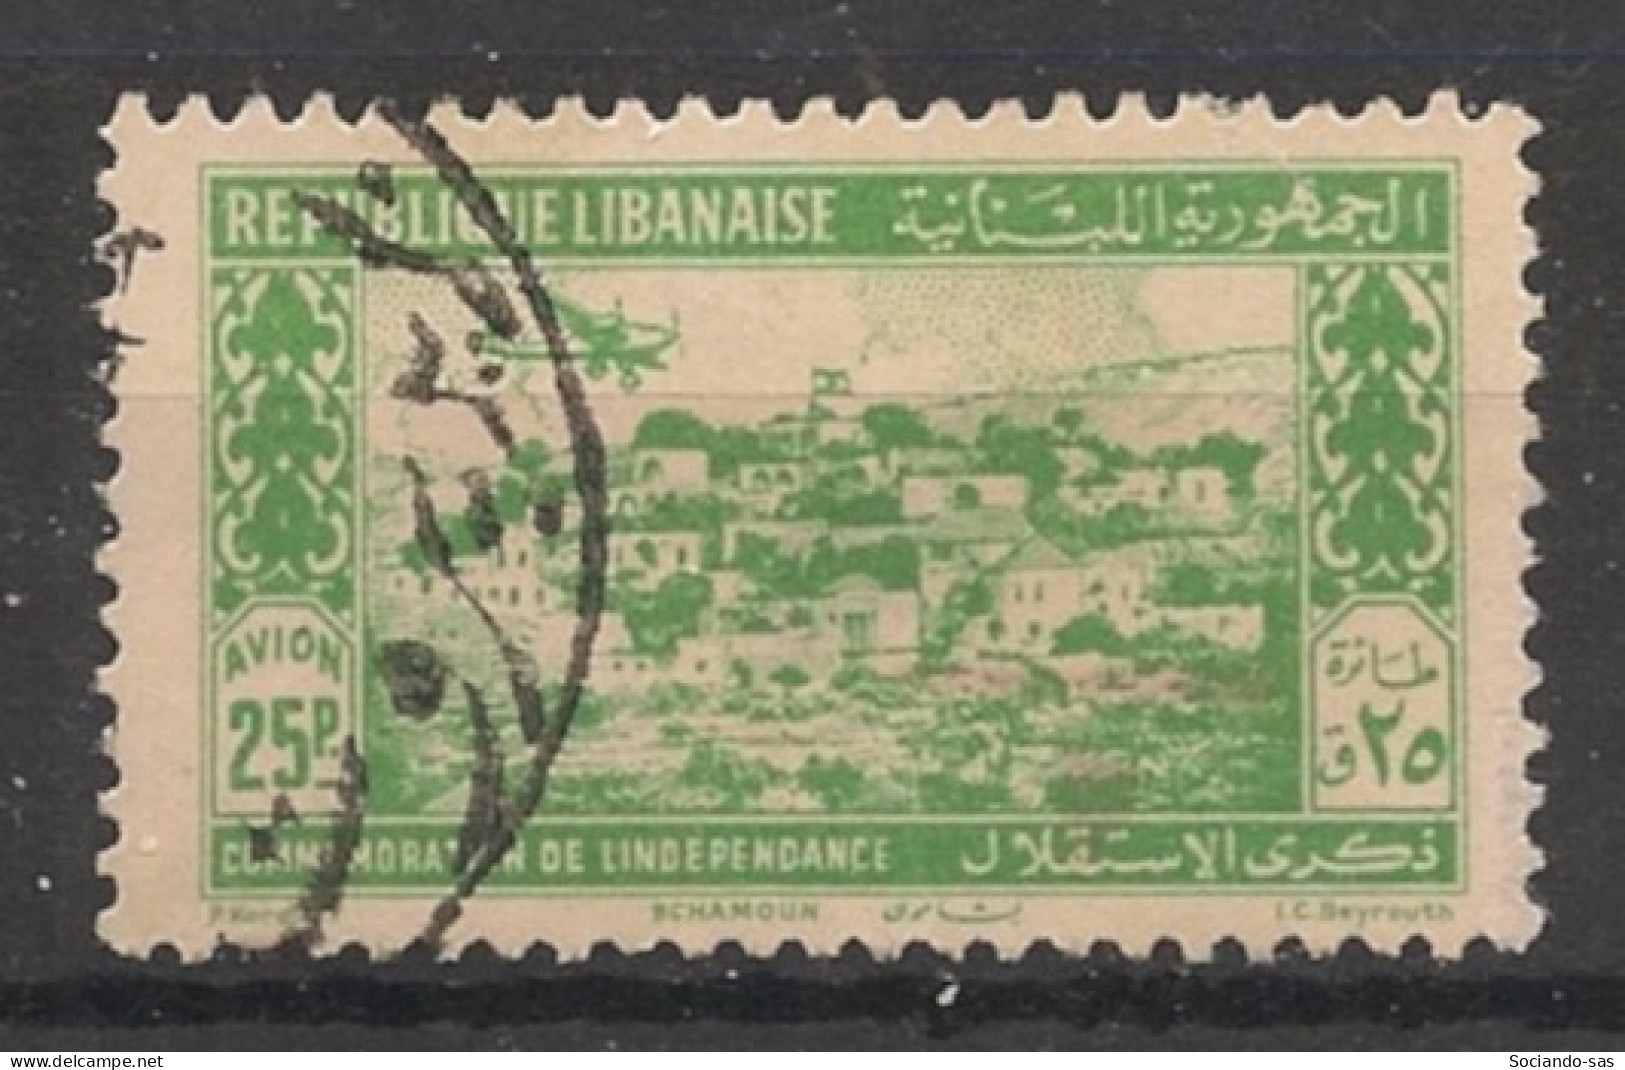 GRAND LIBAN - 1943 - Poste Aérienne PA N°YT. 85 - Avion 25pi Vert-jaune - Oblitéré / Used - Used Stamps